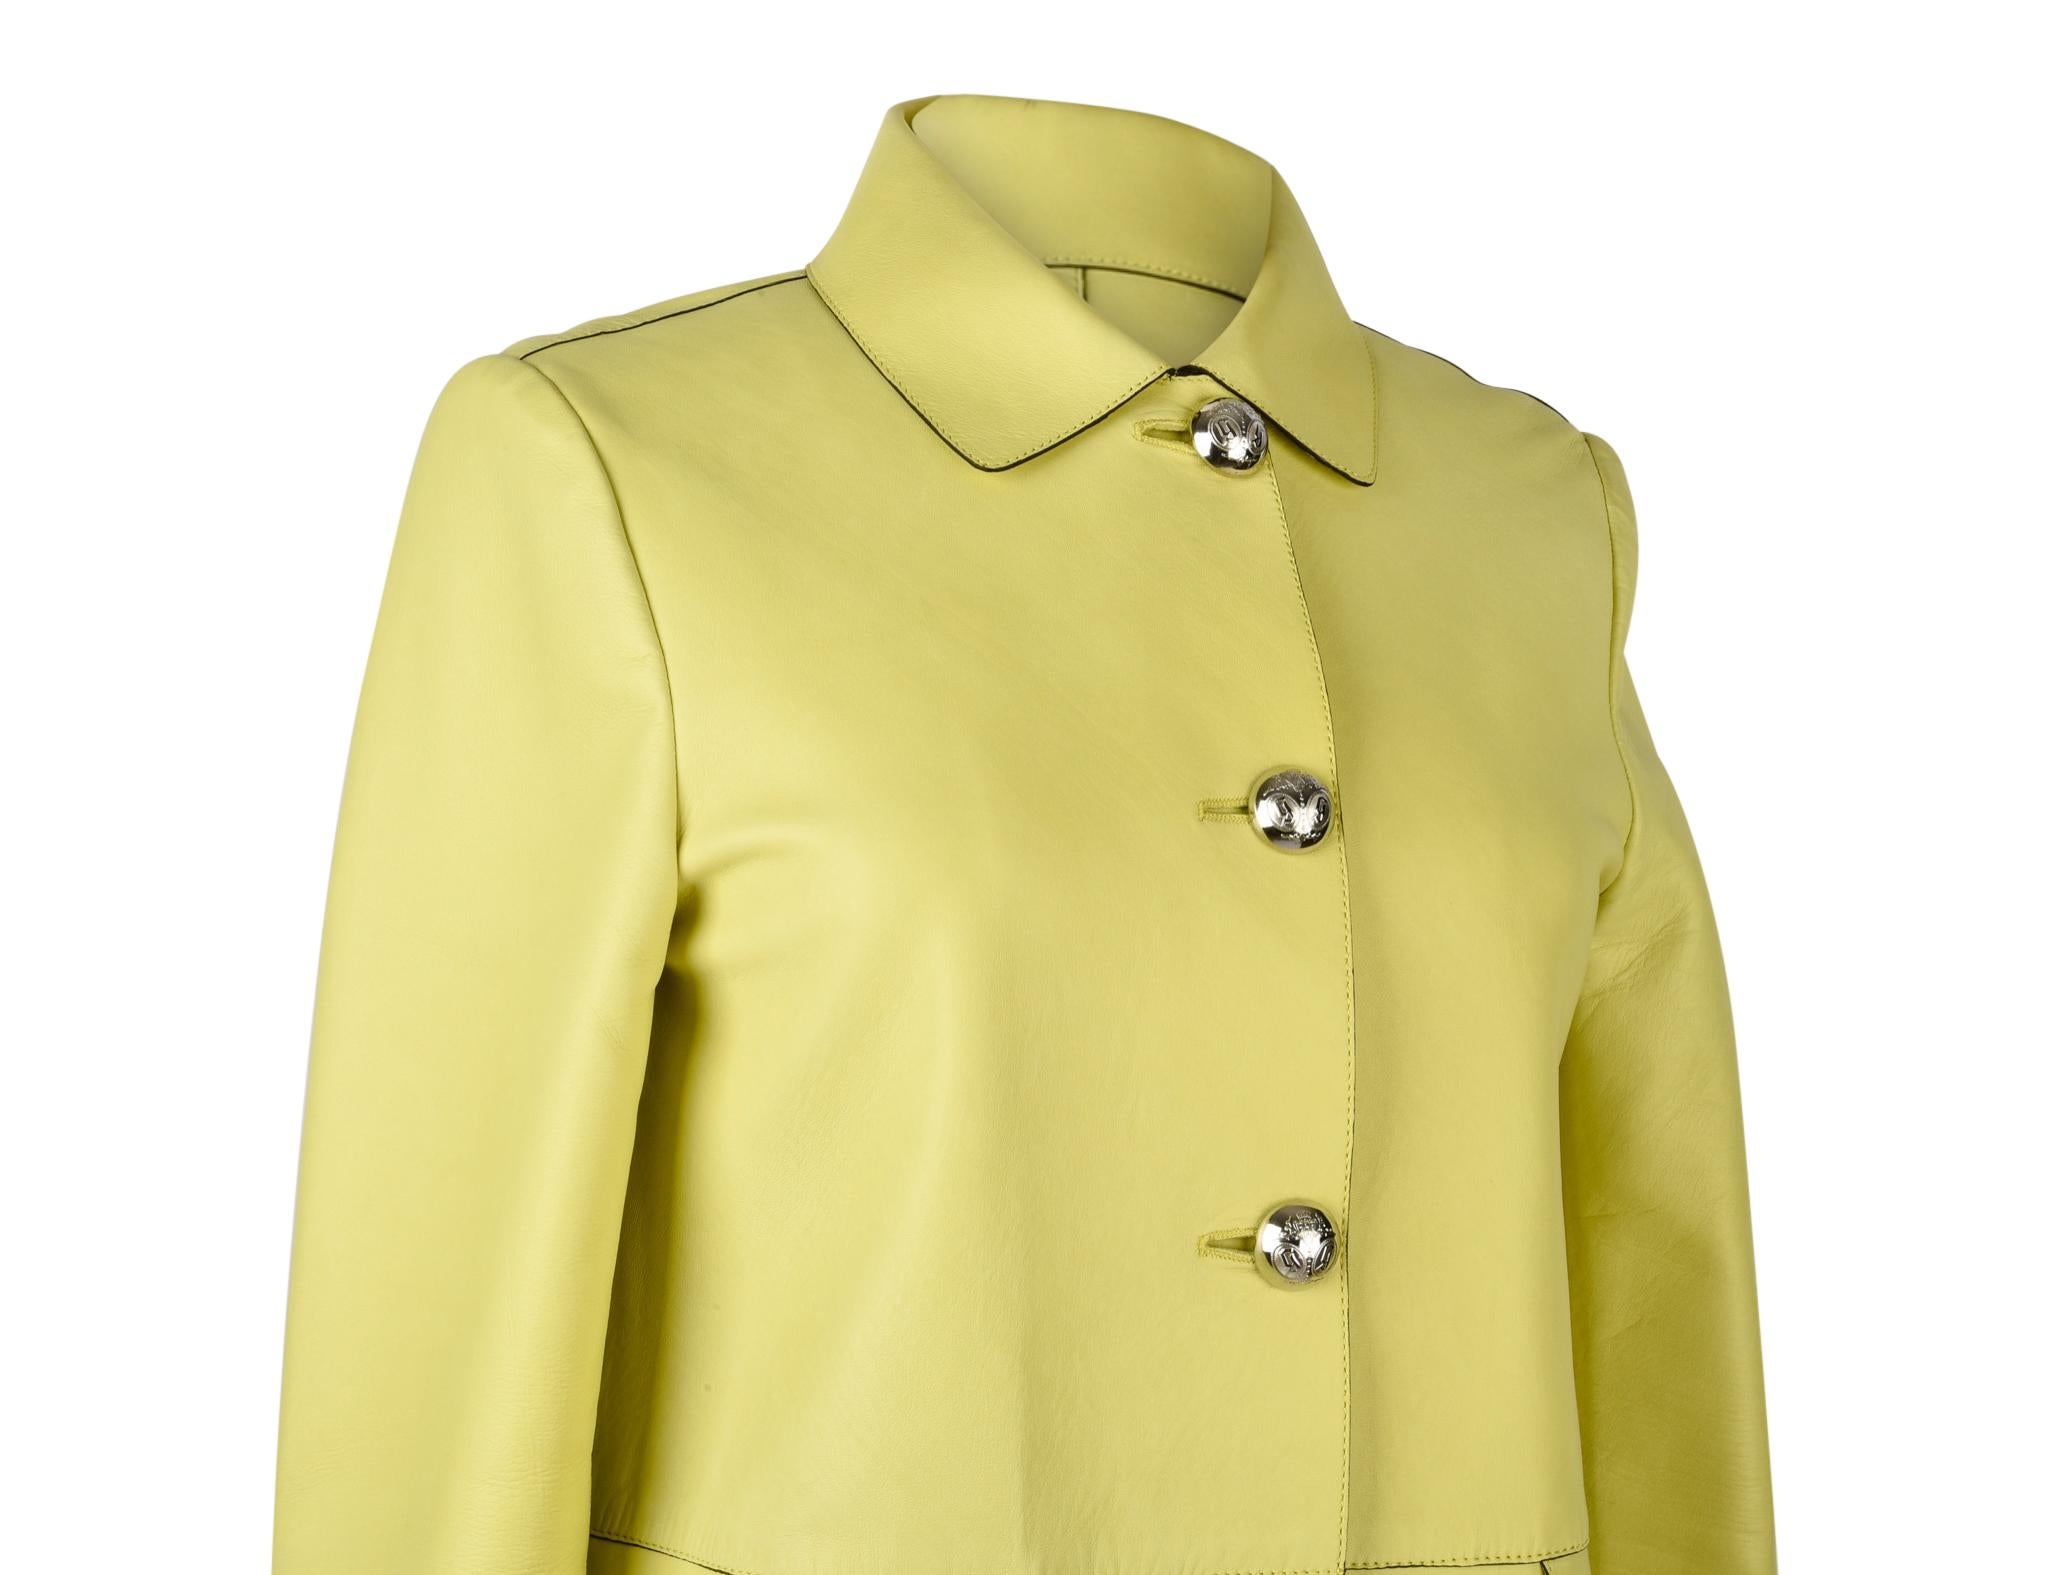 Gucci Coat Lambskin Leather Lime Yellow 40 / 8 6